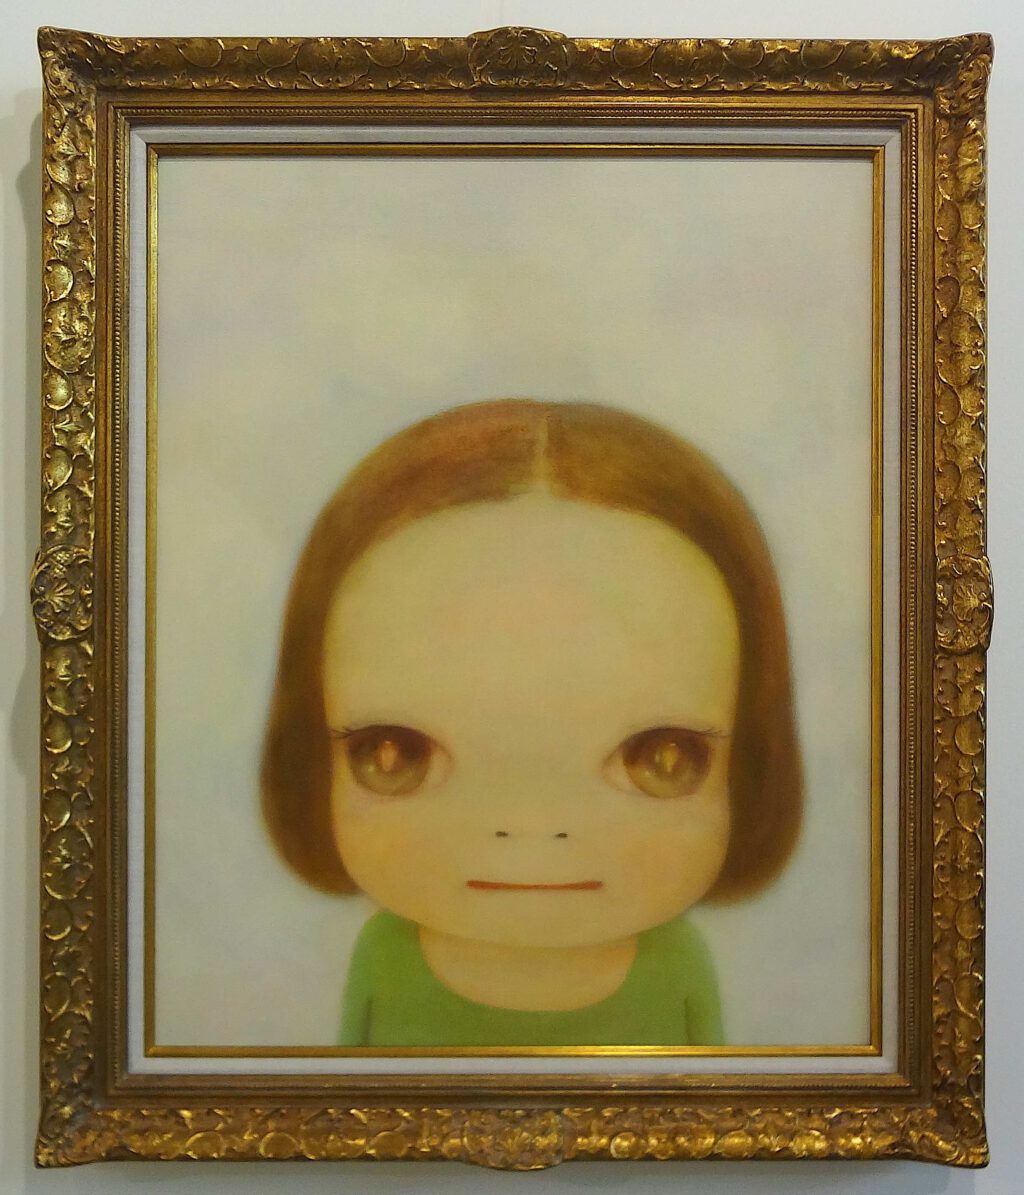 奈良美智 NARA Yoshitomo Cloudy 2006. Acrylic on canvas, 81 x 65 cm @ Blum & Poe, Art Basel 2013